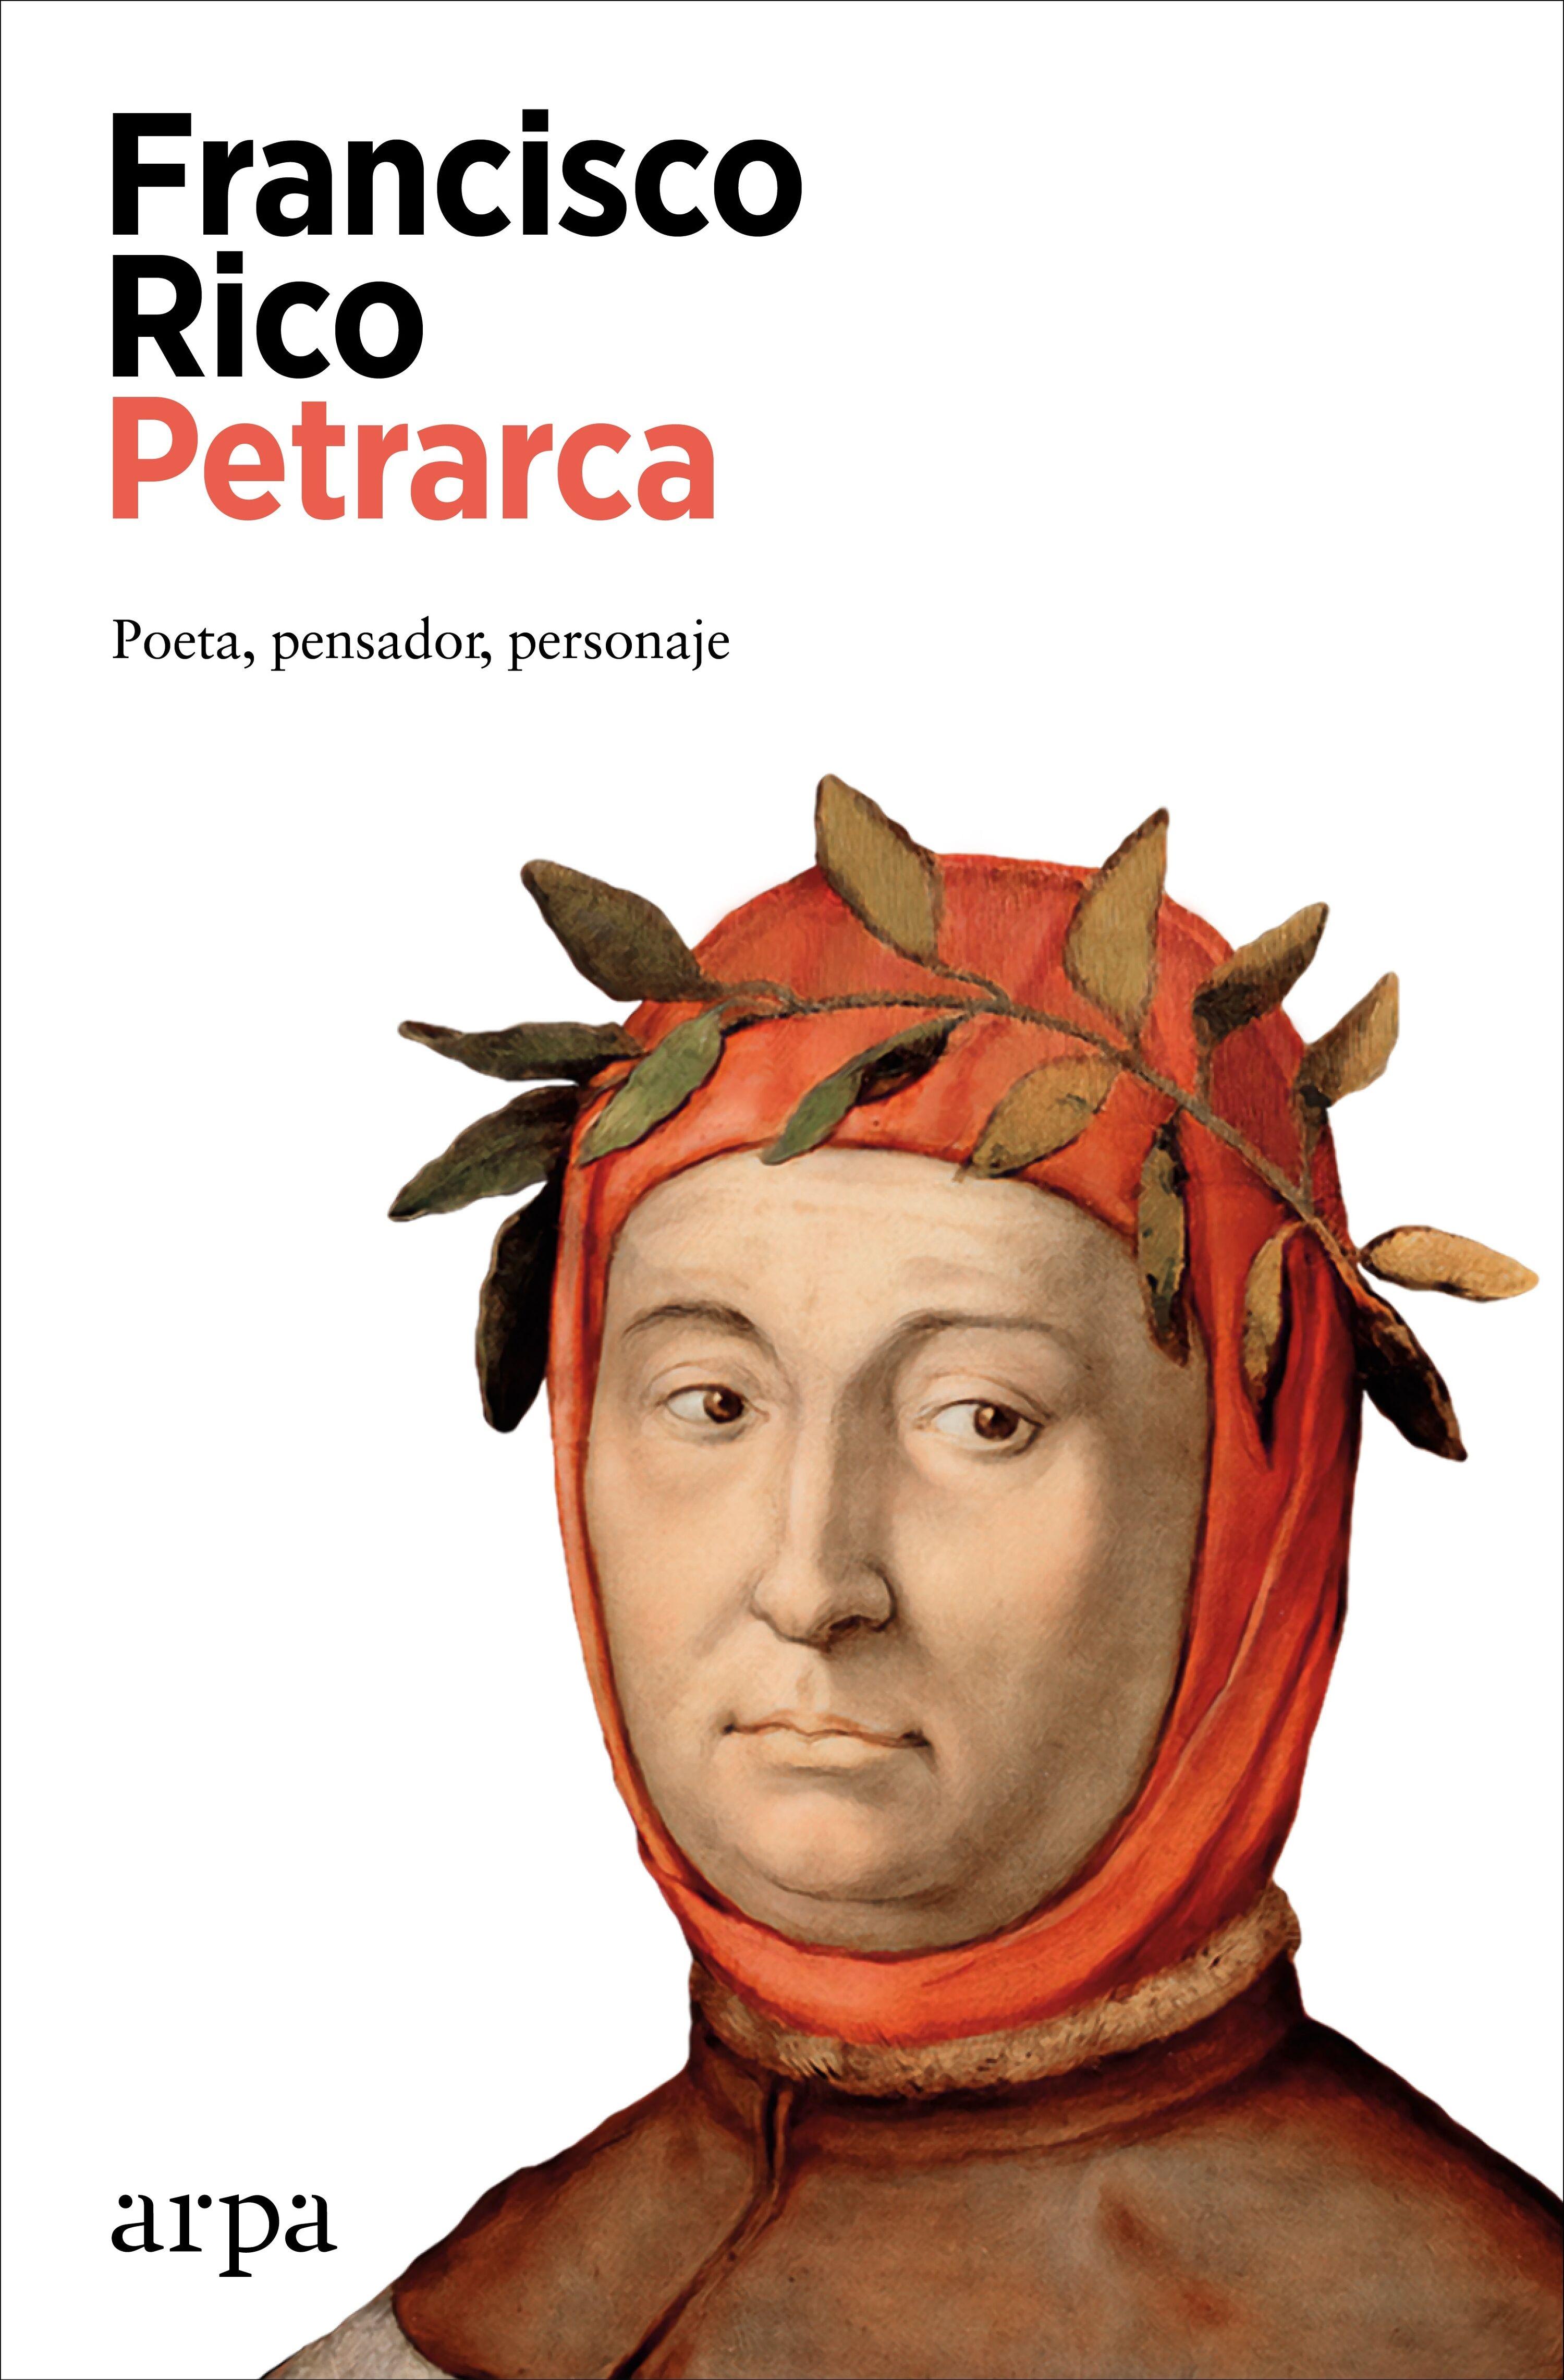 Petrarca "Poeta, Pensador, Personaje"